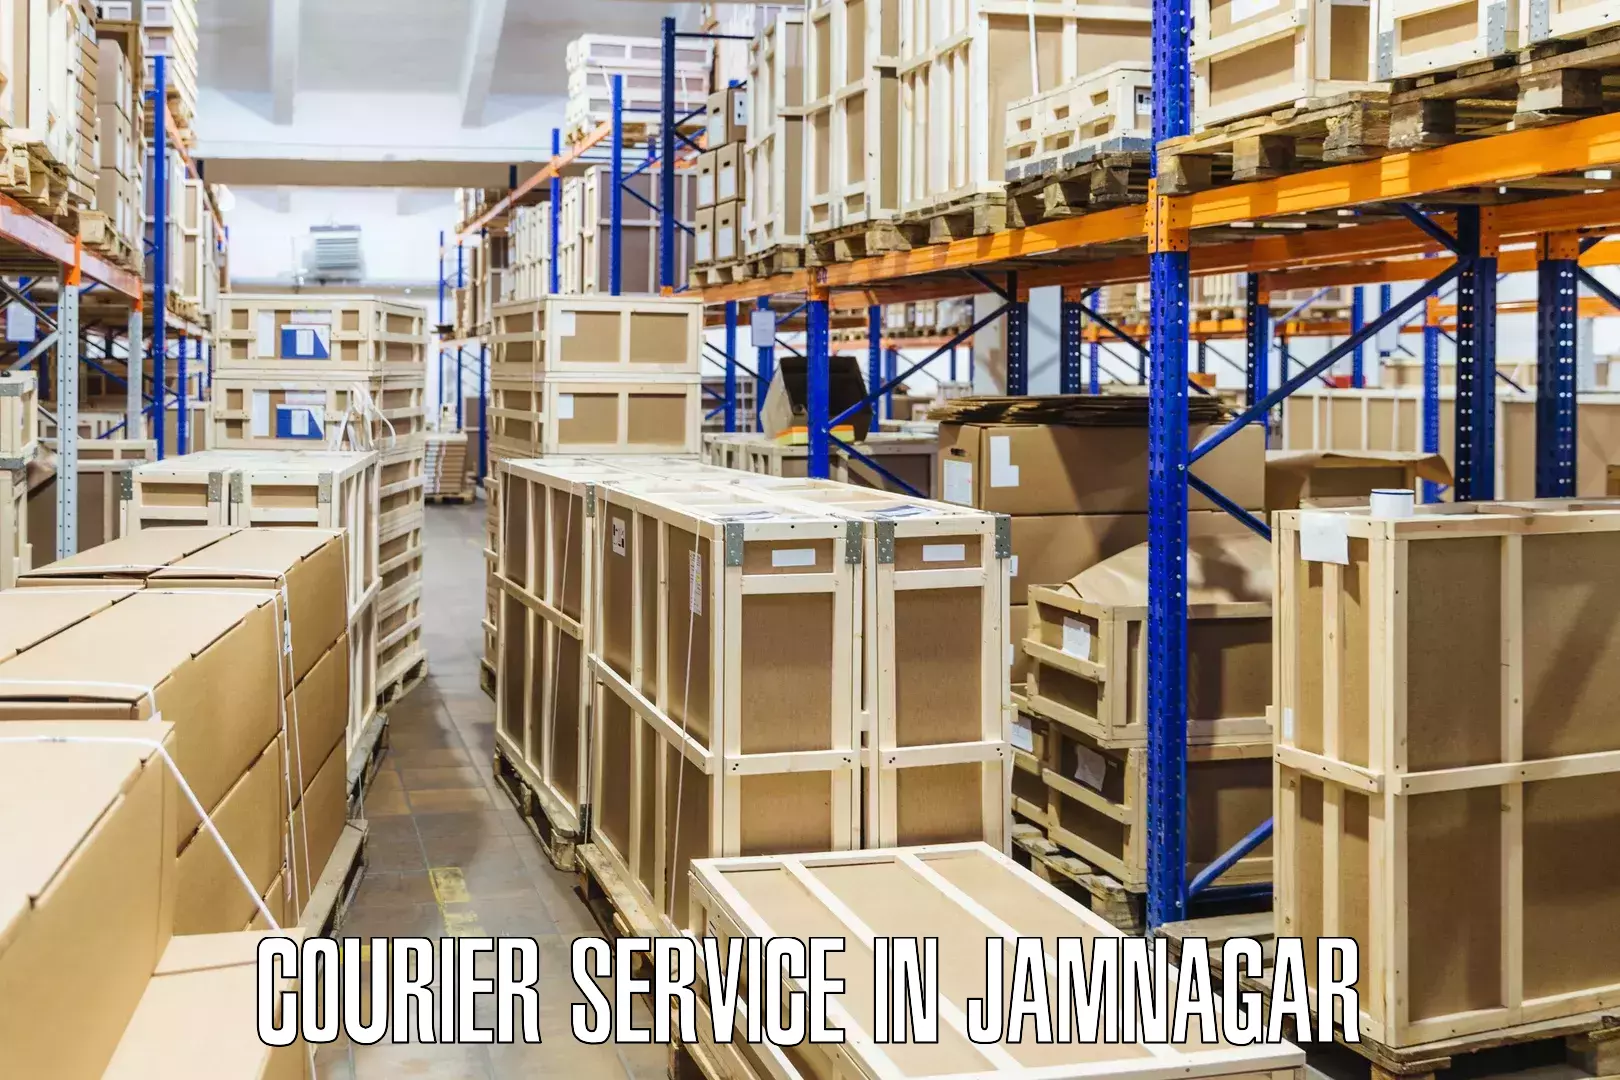 Express shipping in Jamnagar